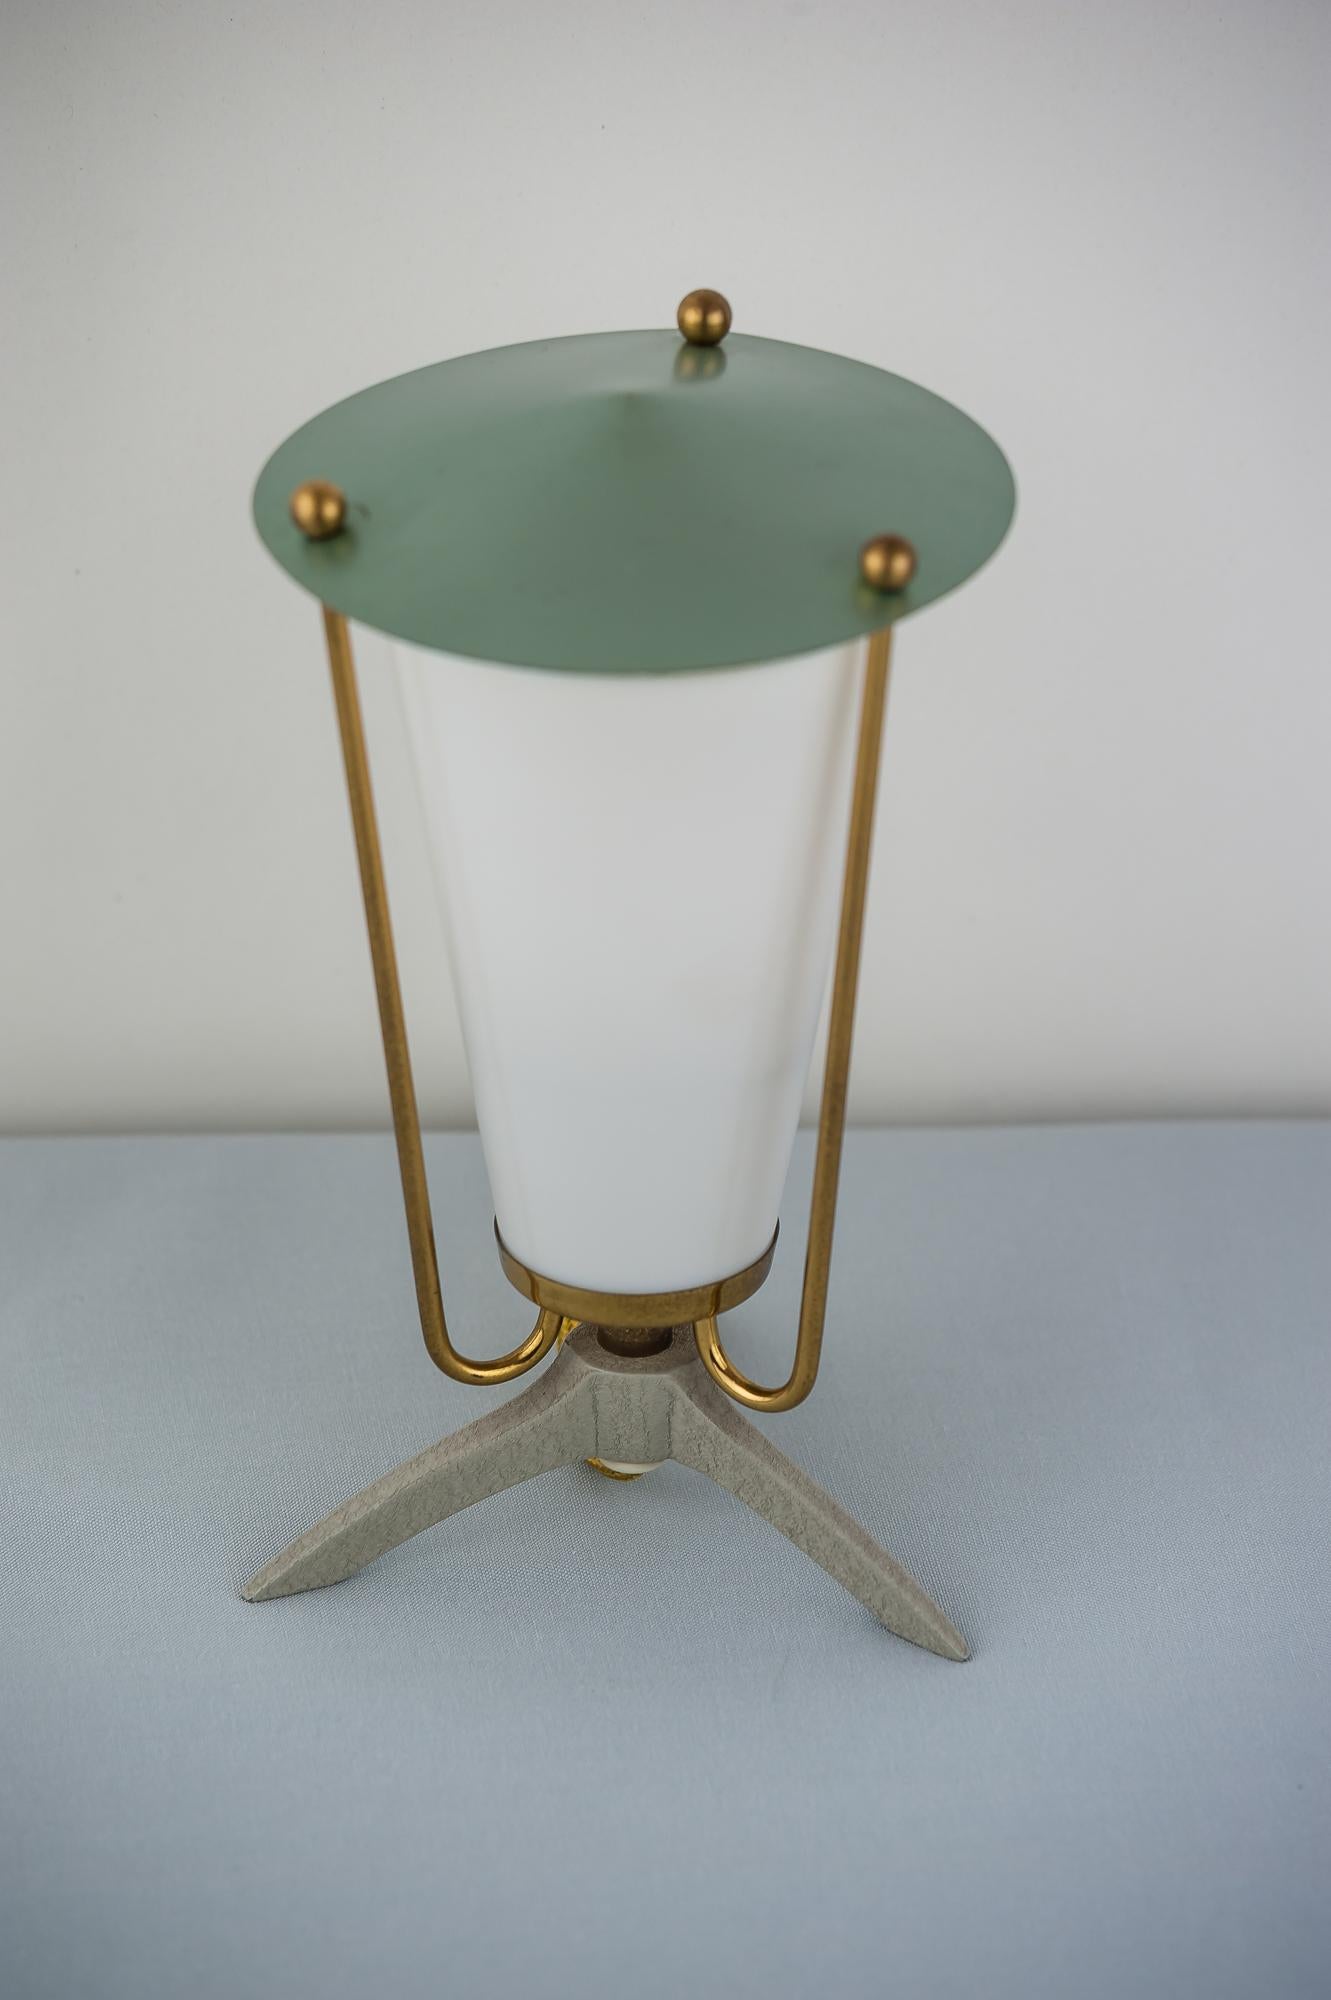 Petite lampe de table Kalmar, circa 1960s
État original.